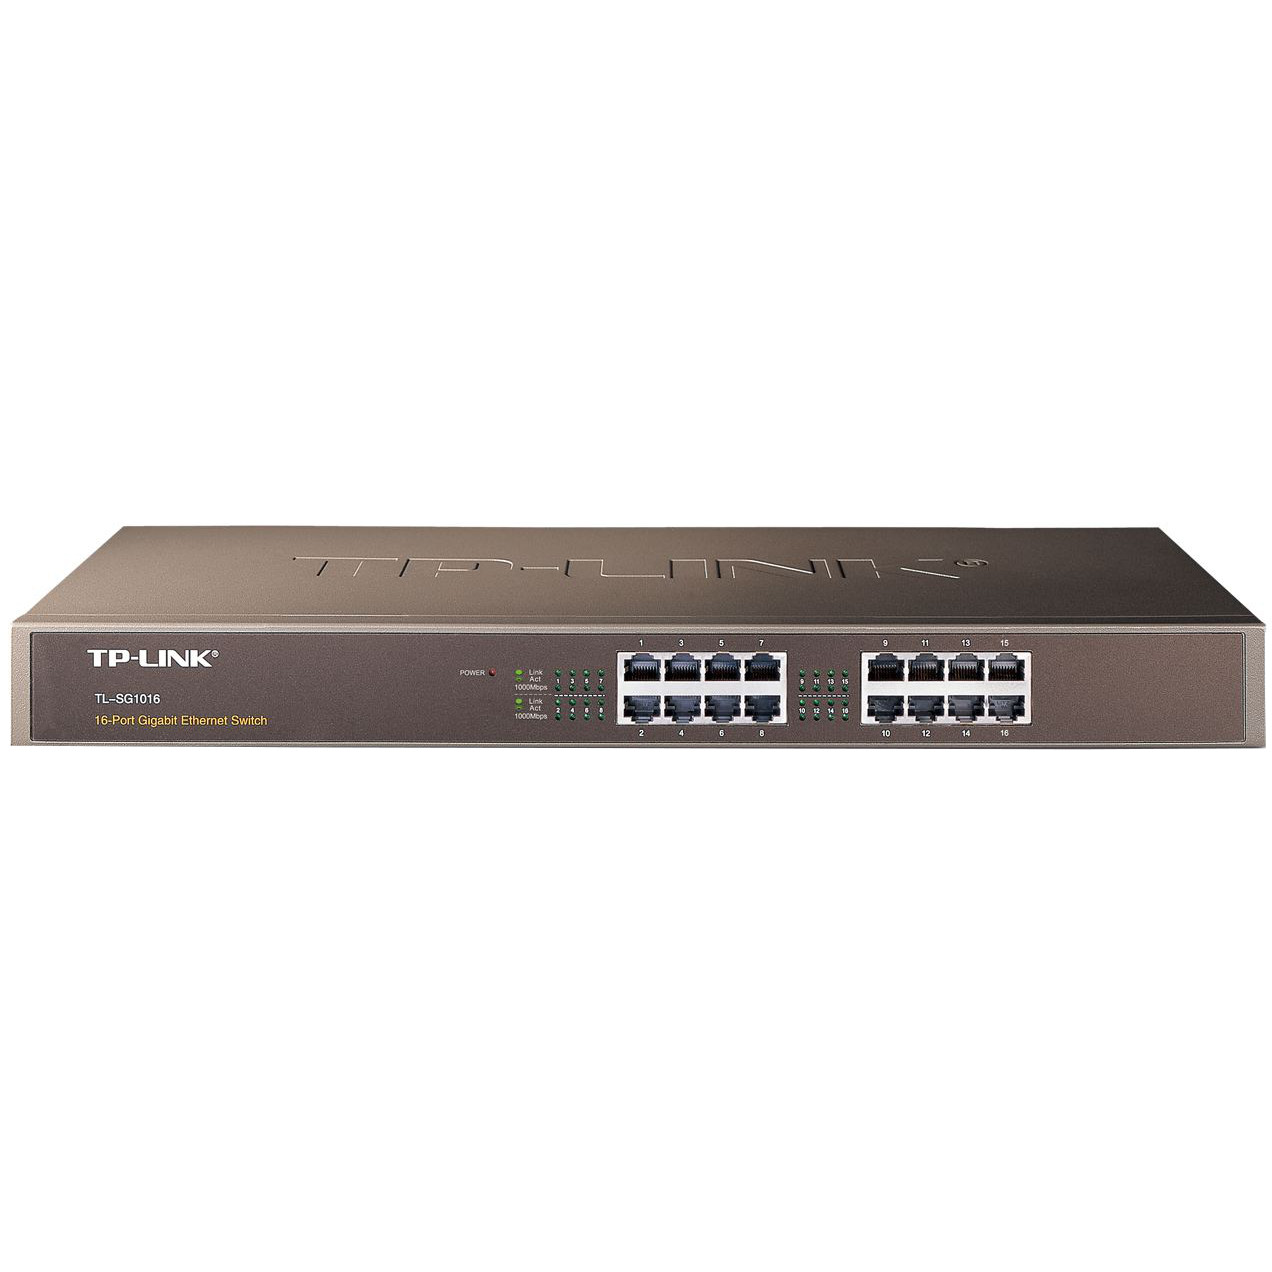  Switch TP-Link TL-SG1016, 16 porturi, 10/100/1000 mb/s 